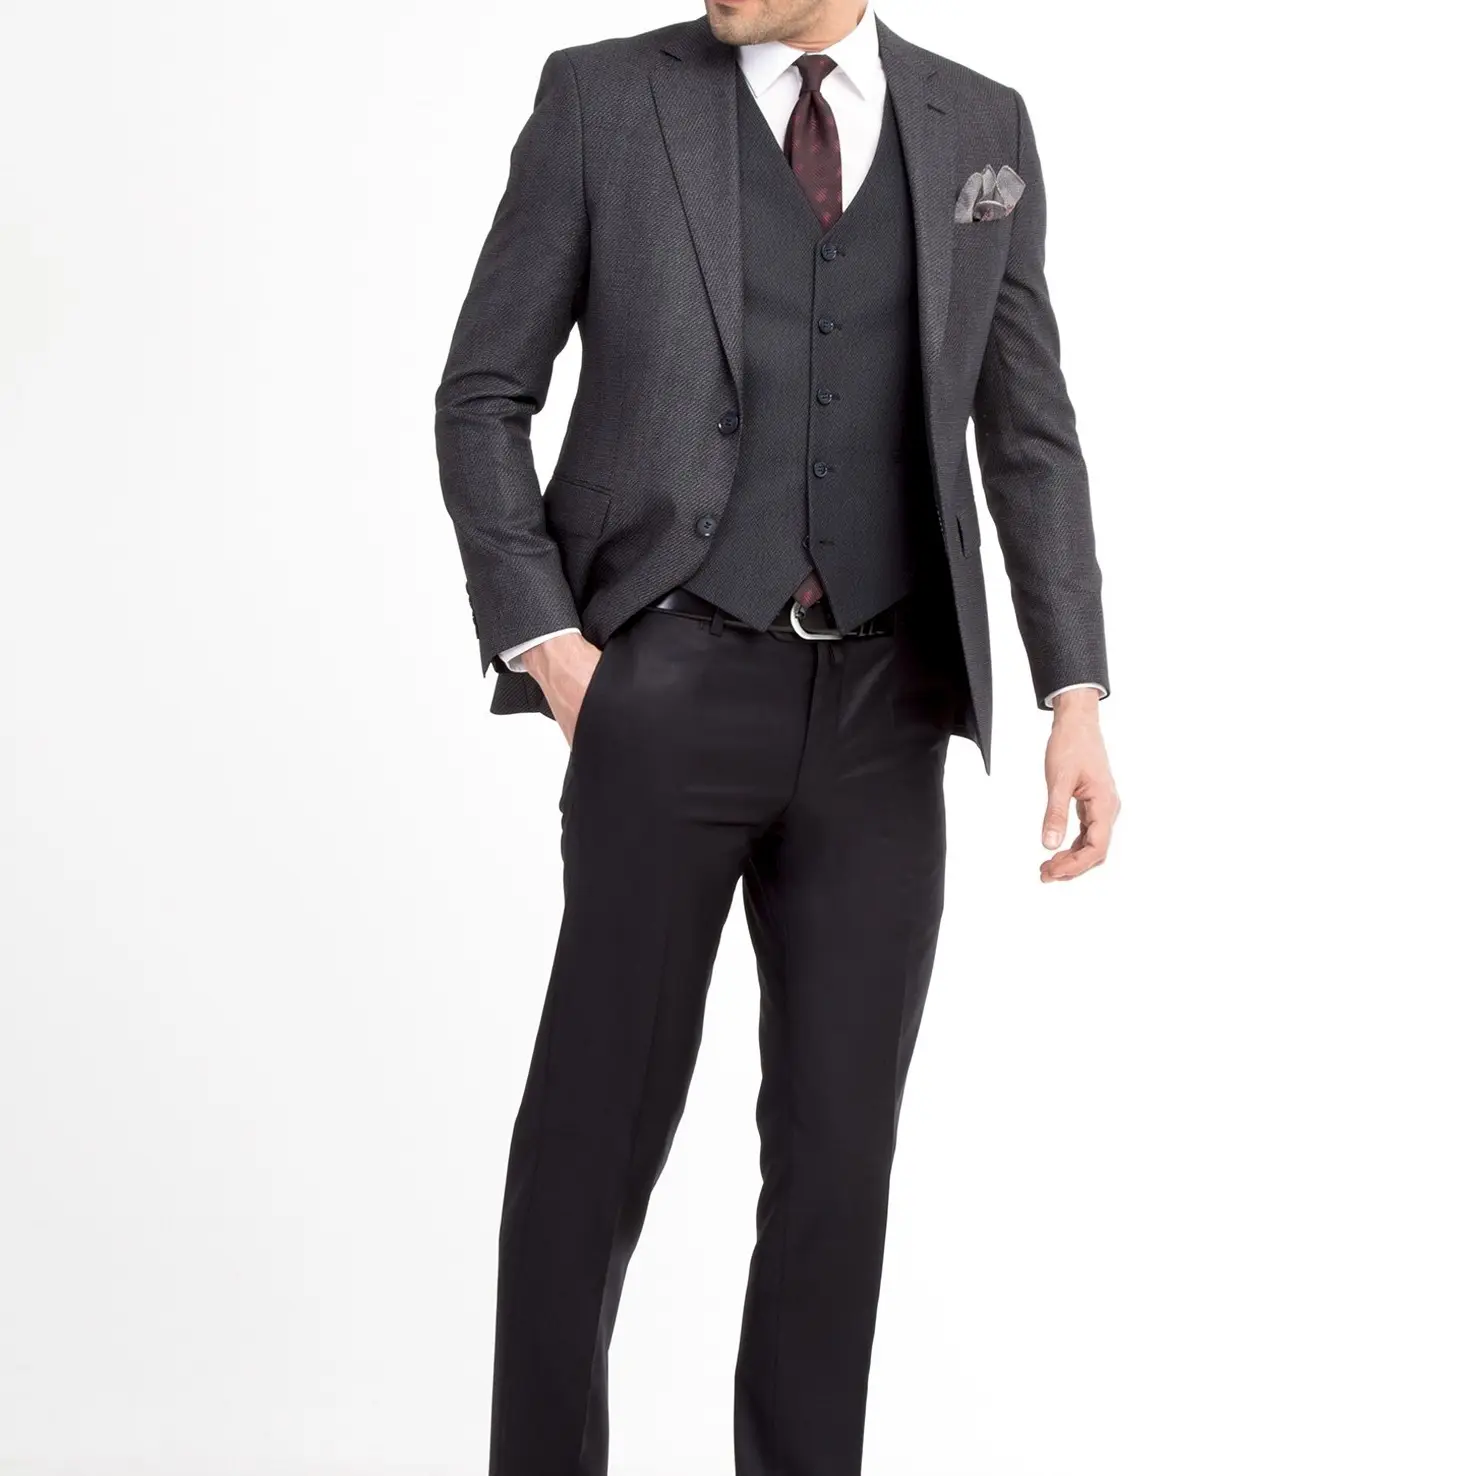 Kigili Turkey Luxury Fashion High Quality Premium Business Formal Slim Fit Combined 3 Pcs Anhtracite Men's Suit With Vest